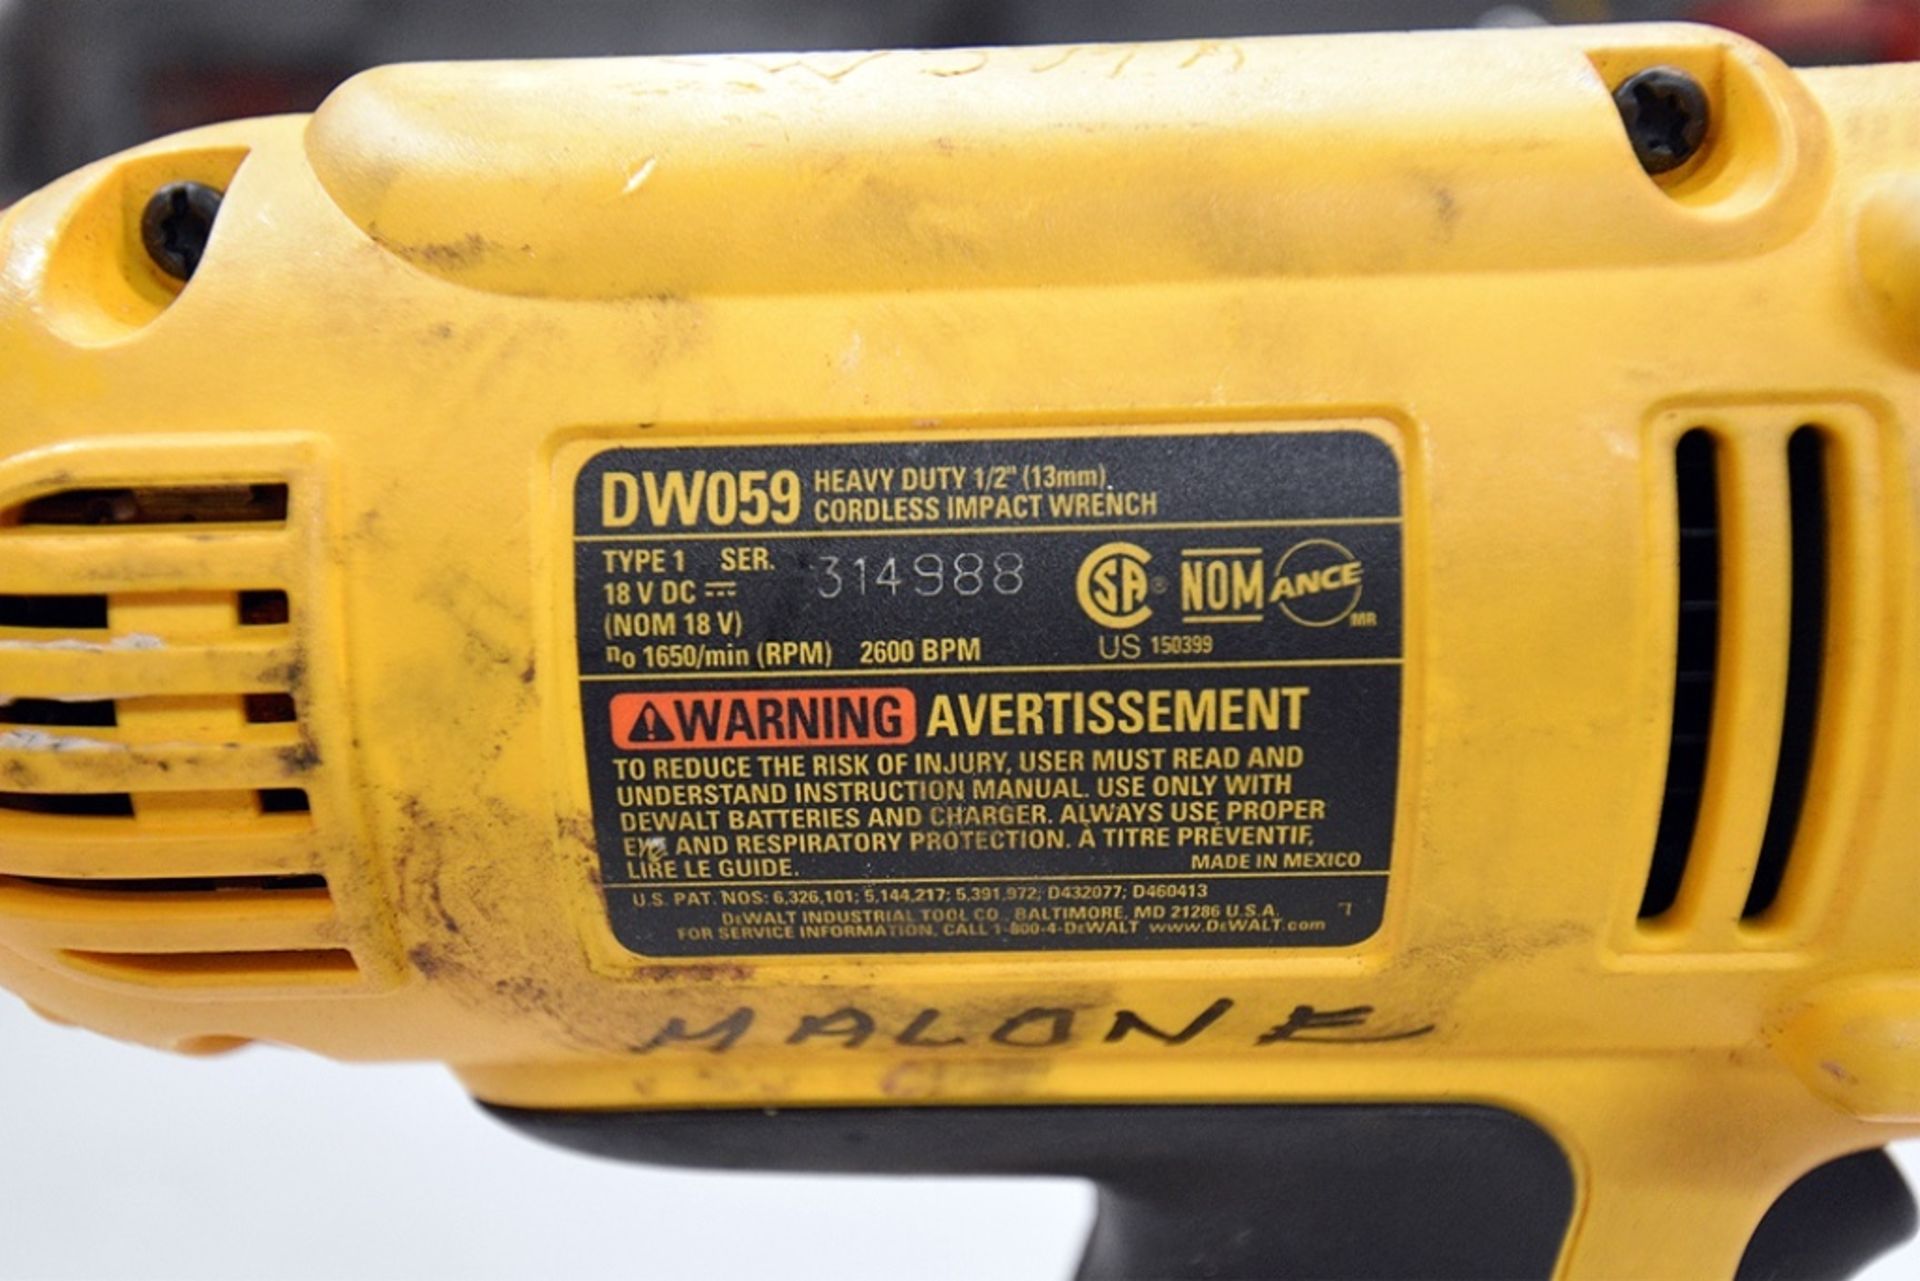 DeWalt DW059 HD 1/2" Cordless Impact Wrench 18v w/ (1) Battery - Image 4 of 4